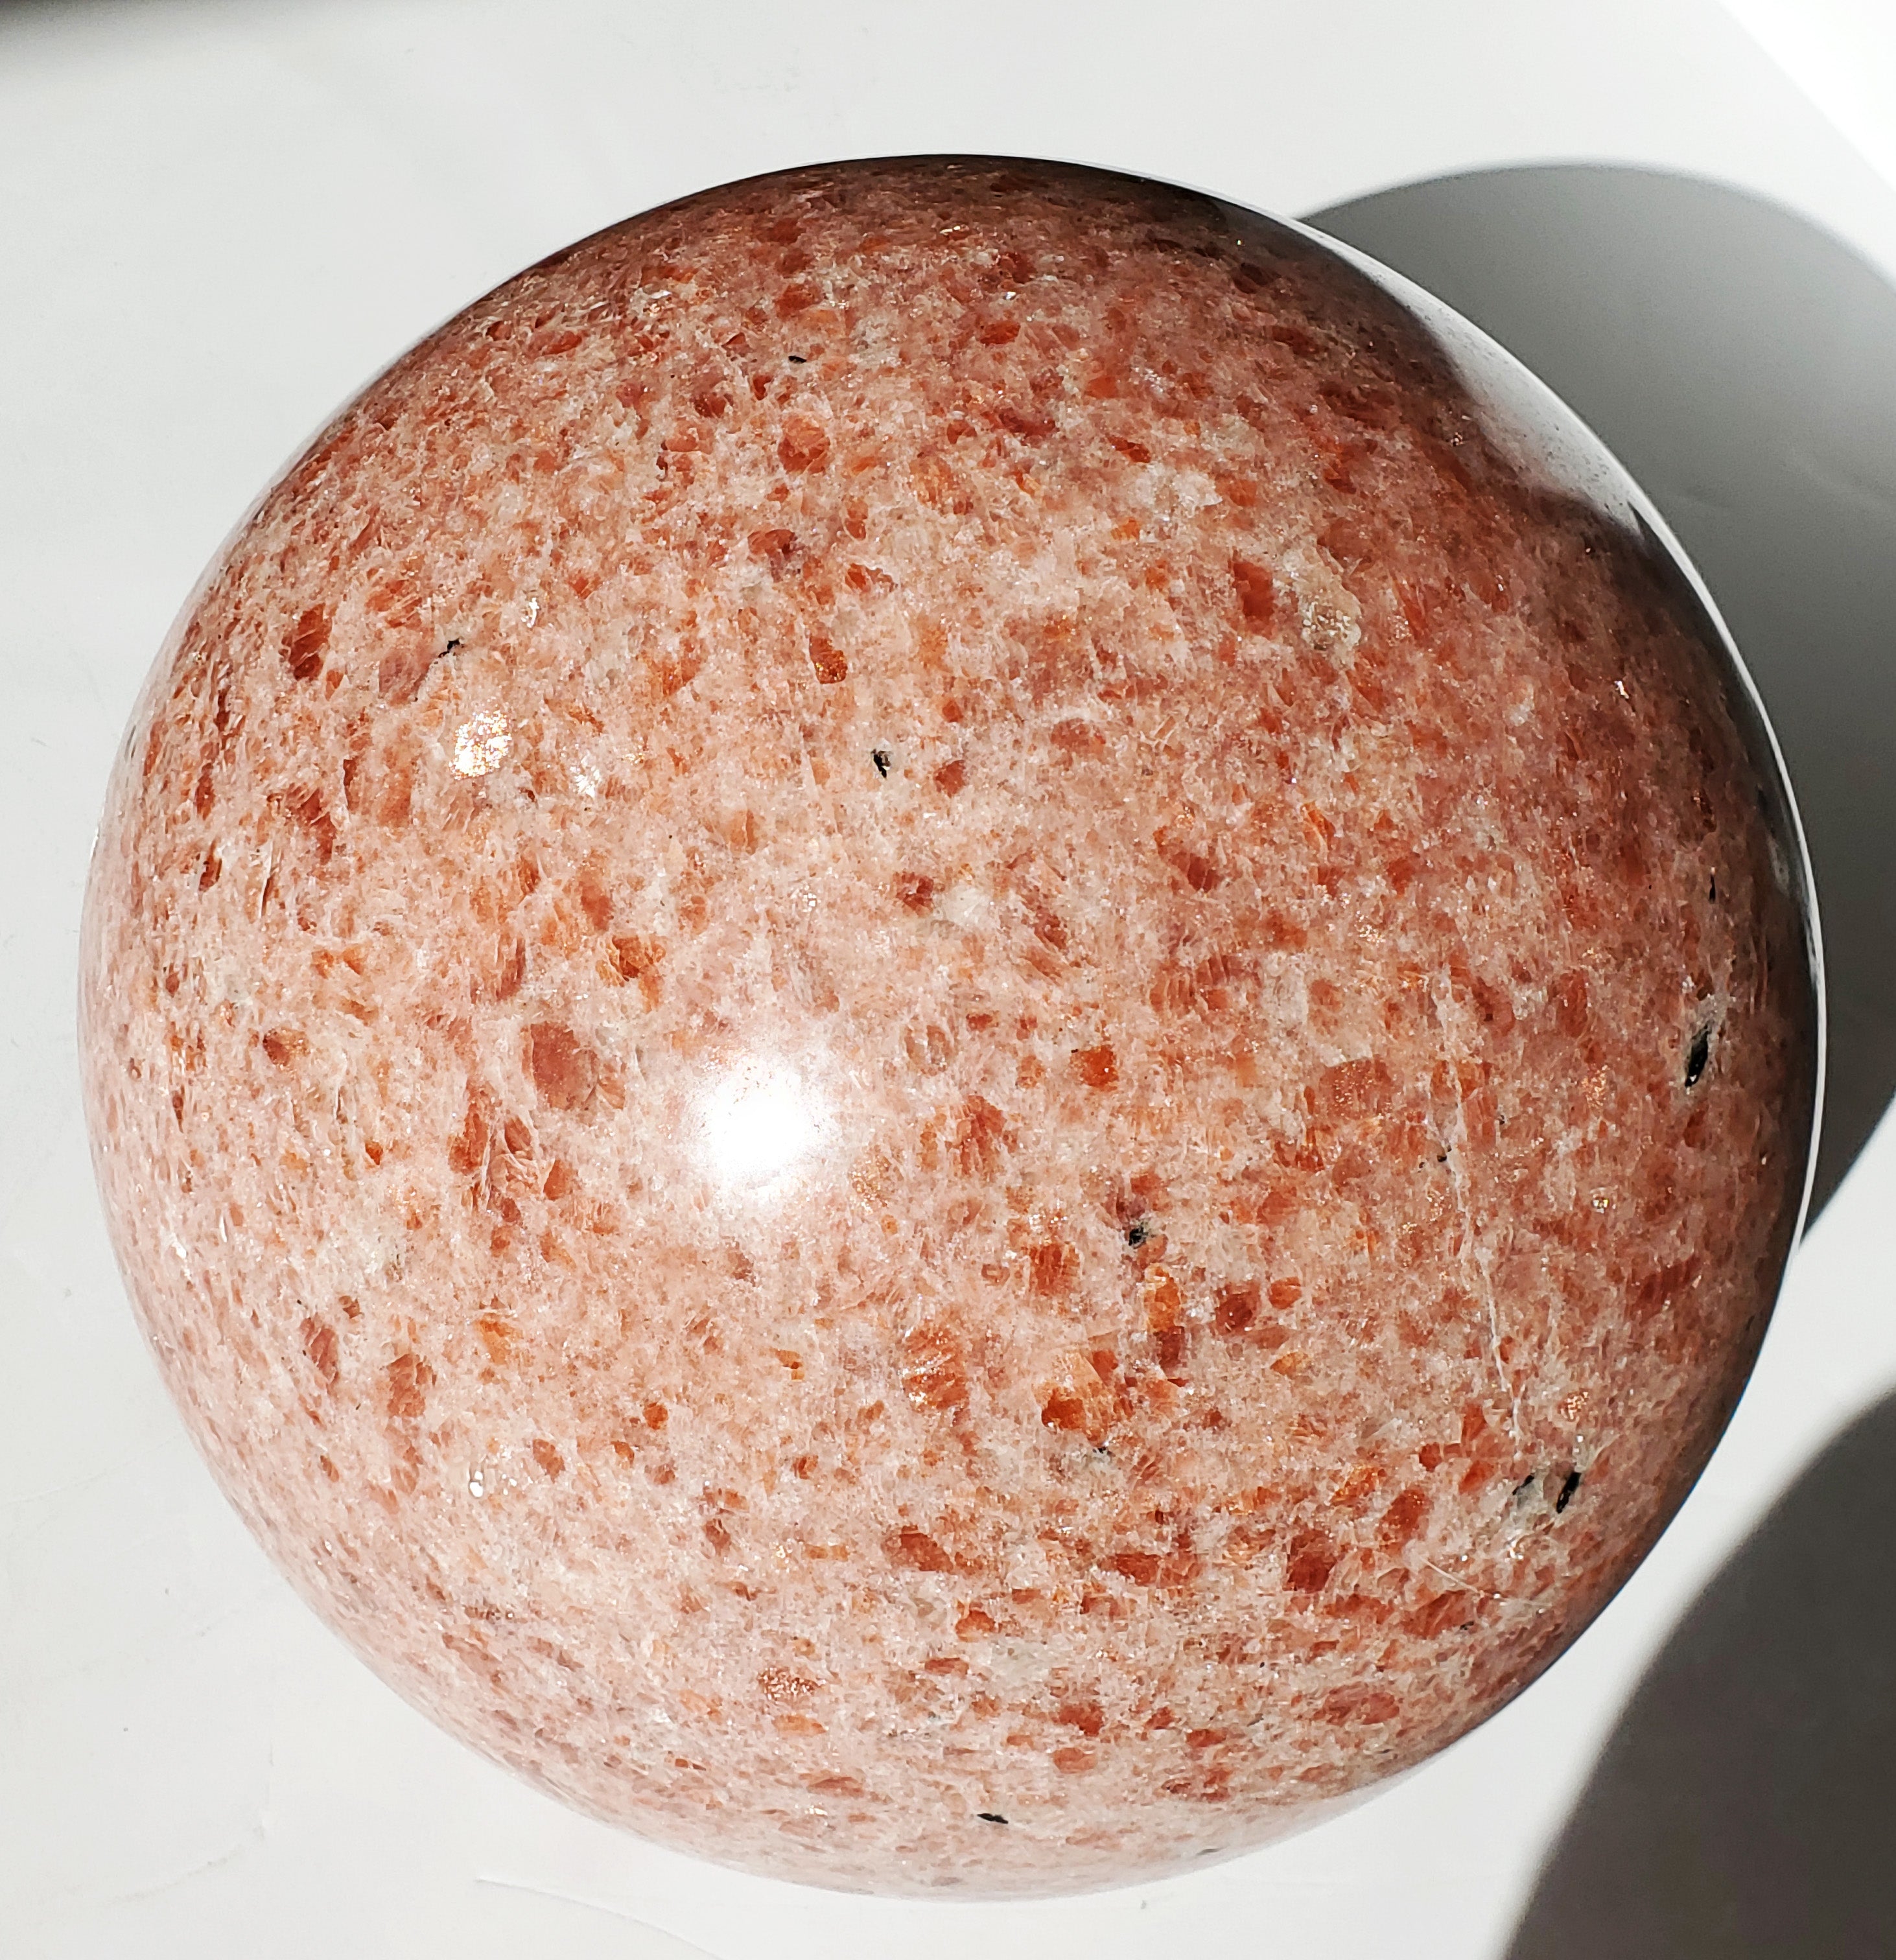 Flashy Sunstone Sphere 51 lb EXTRA LARGE